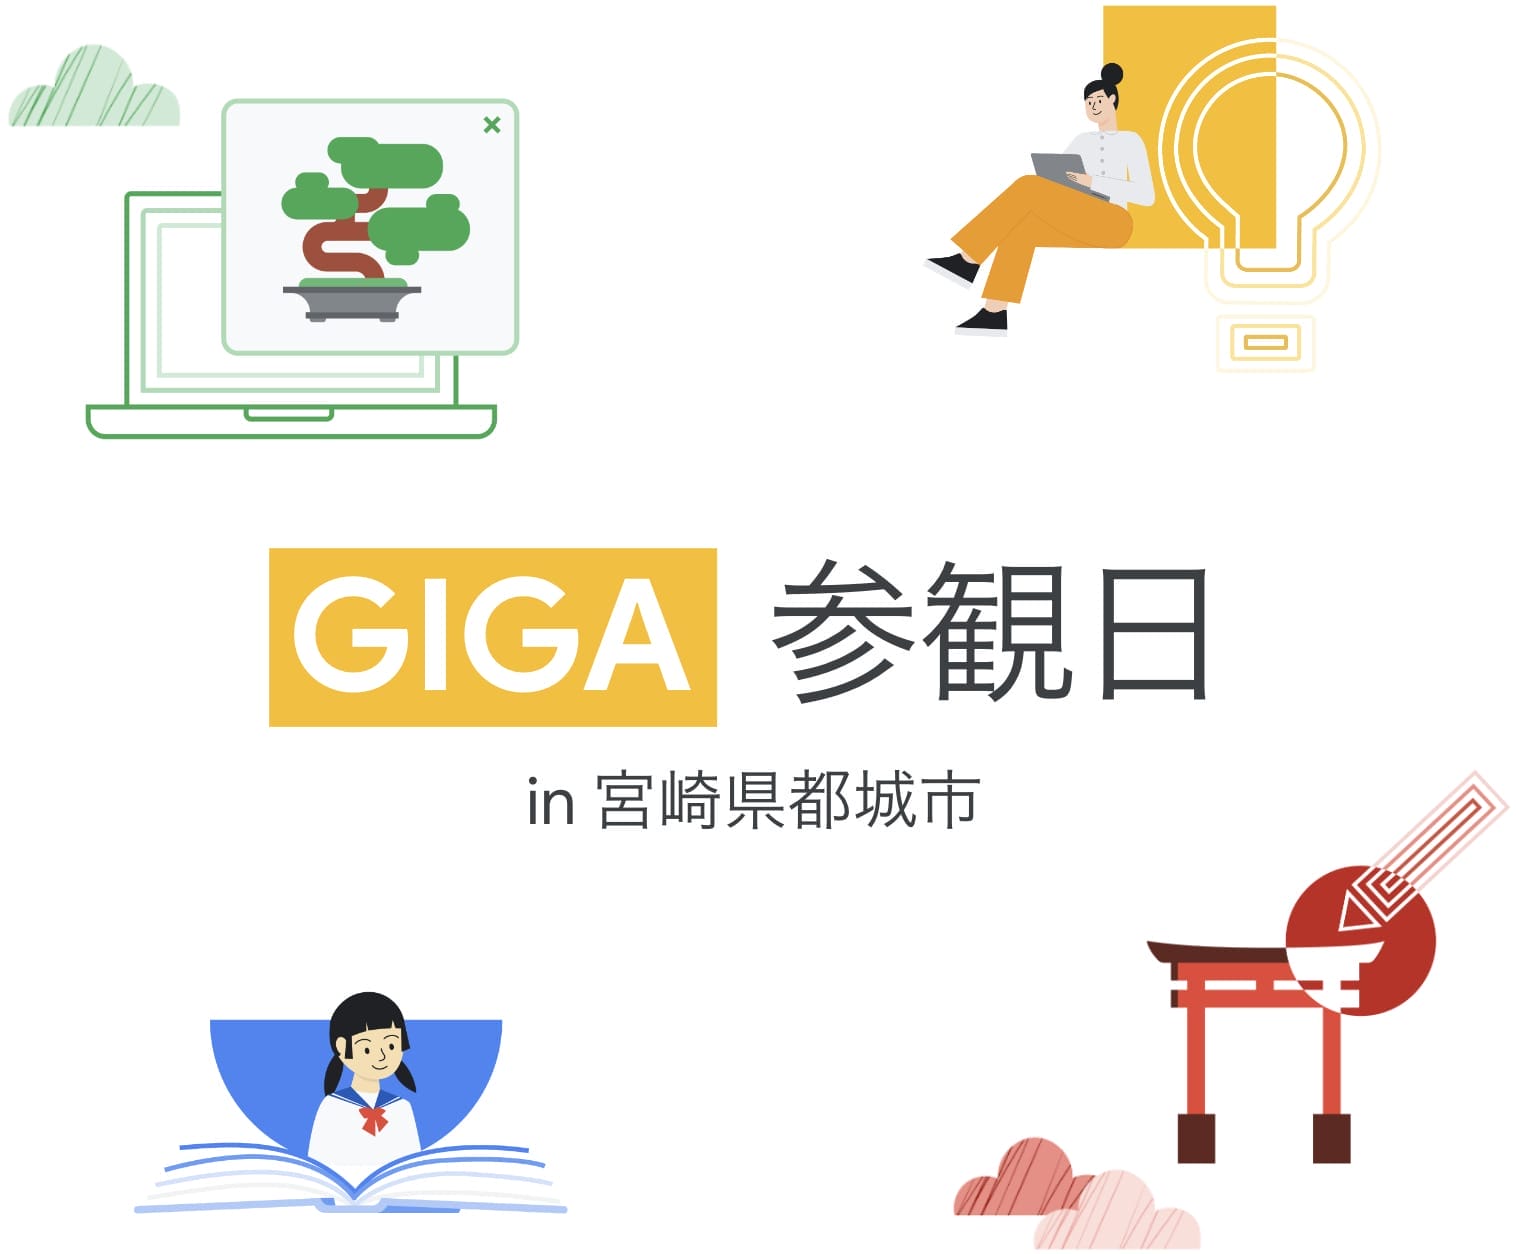 [Google for Education] GIGA 参観日 in 宮崎県都城市